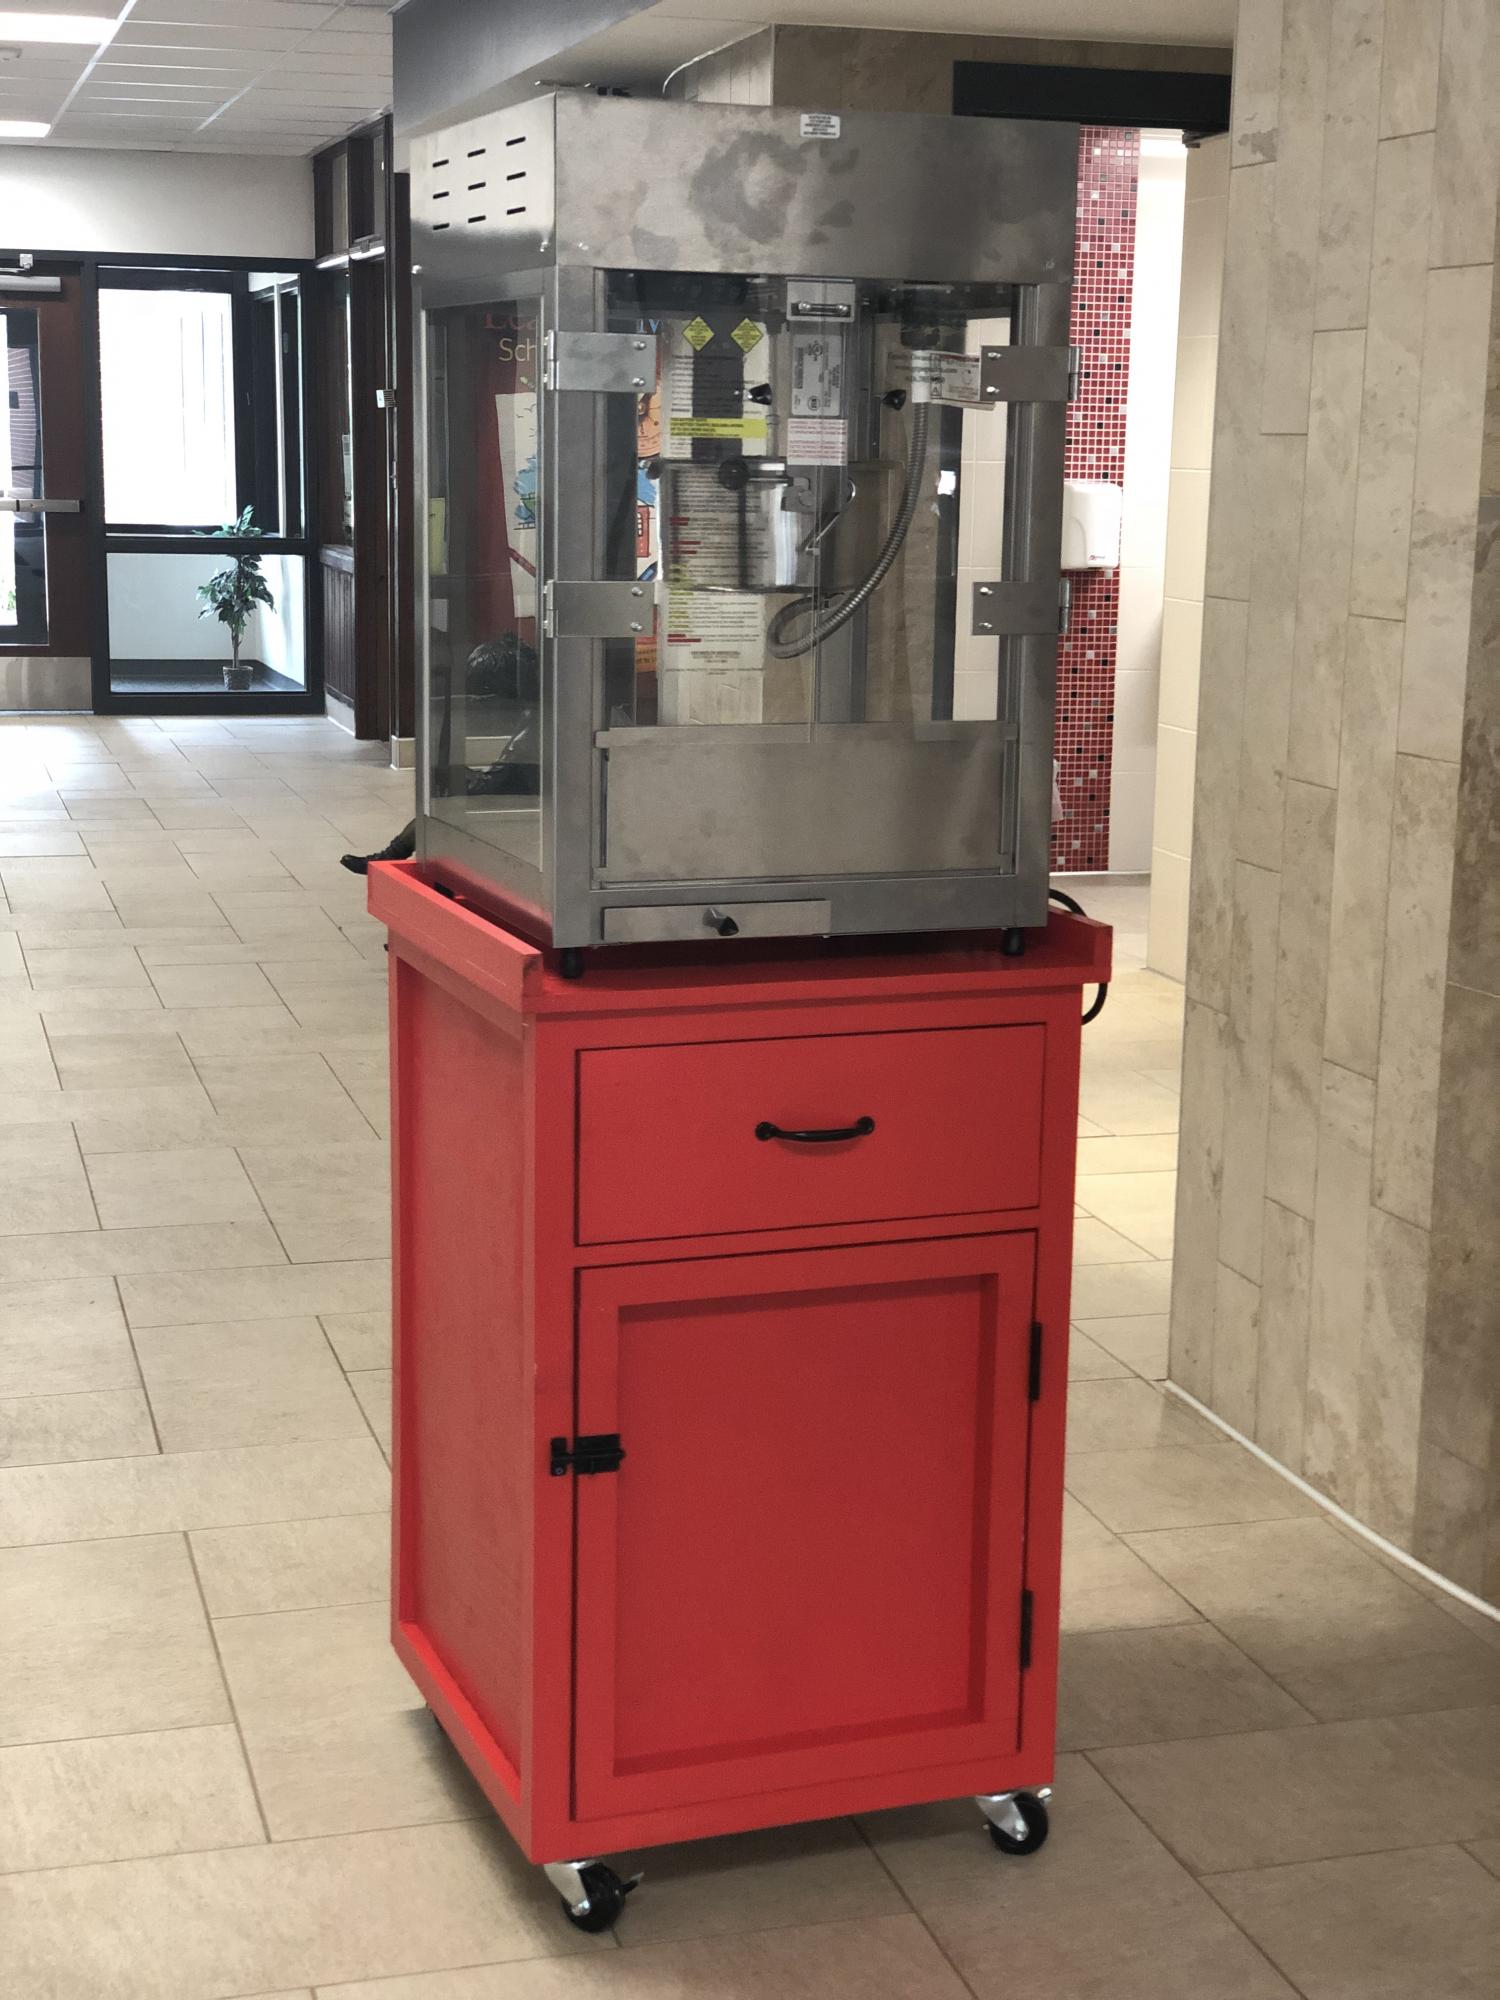 Popcorn Machine Stand and Storage on Wheels